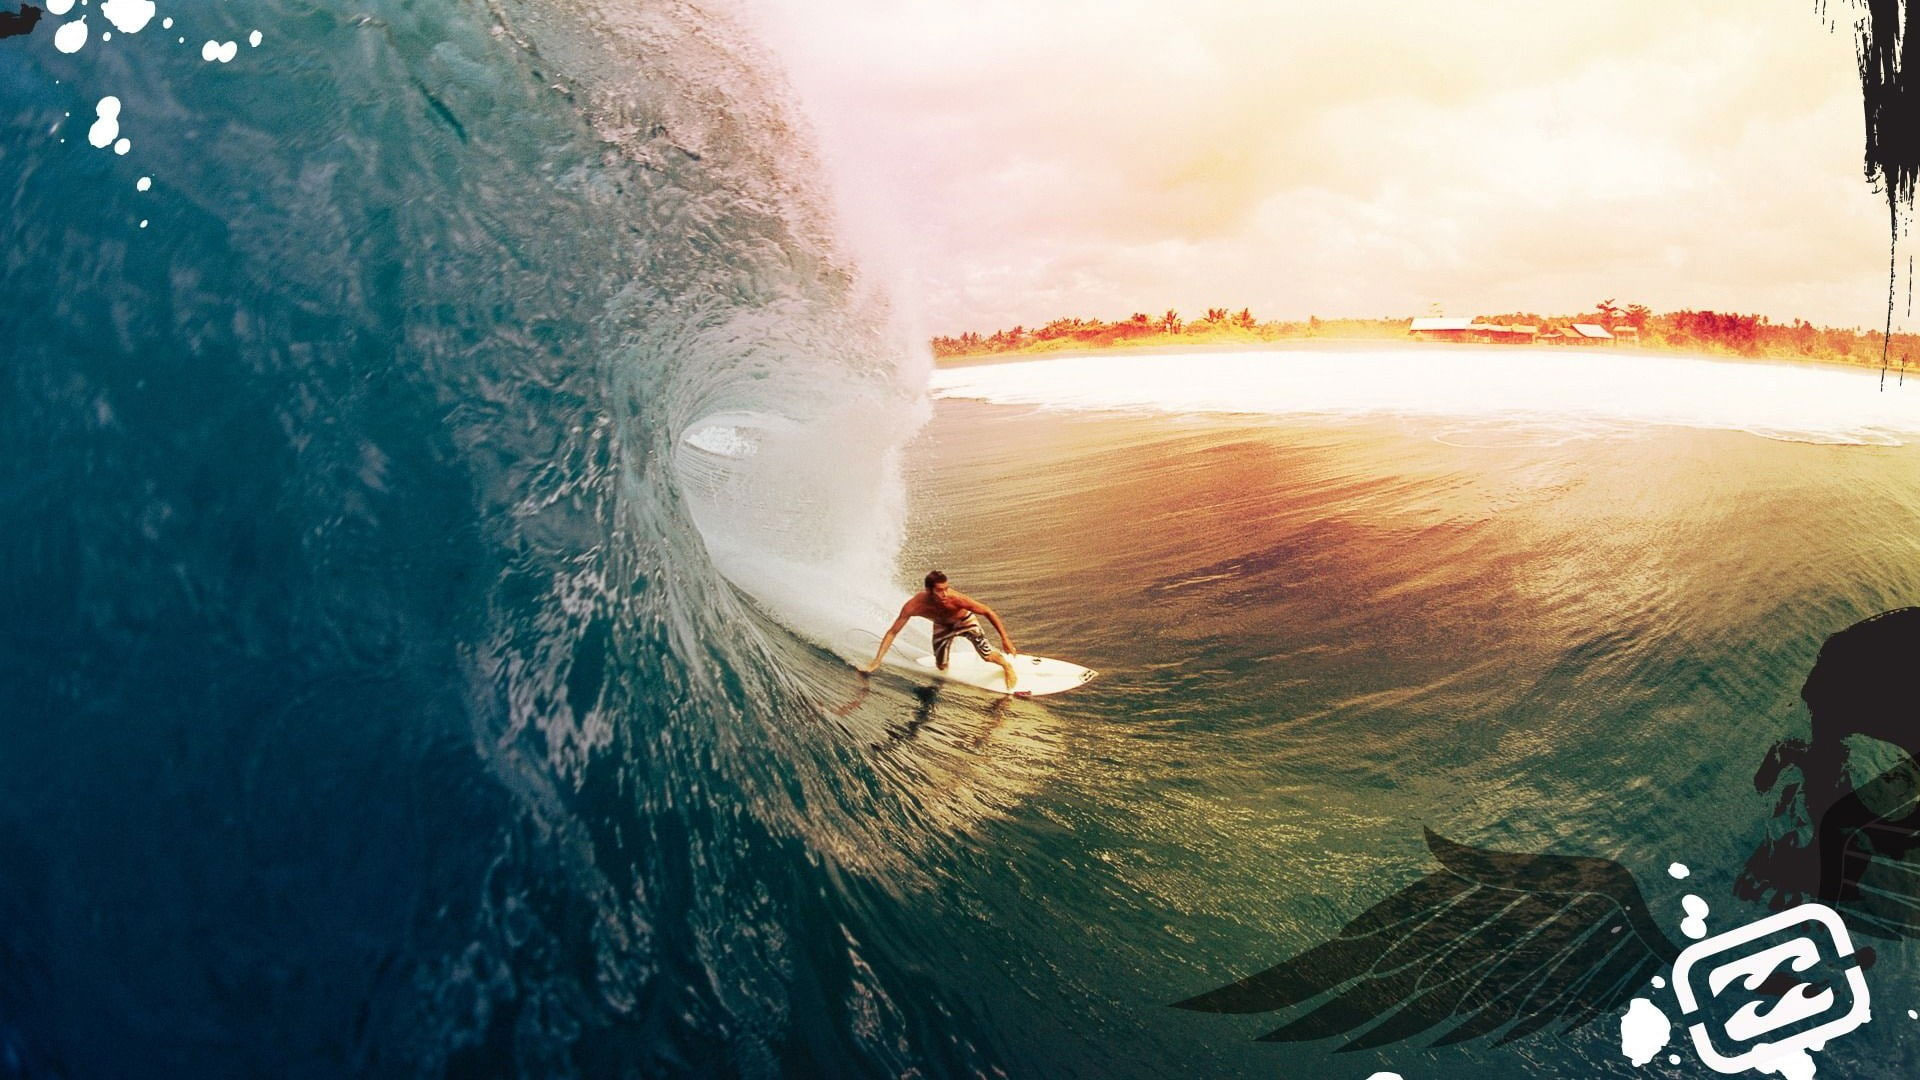 Surfing HD, surfer on white surfboard, sports